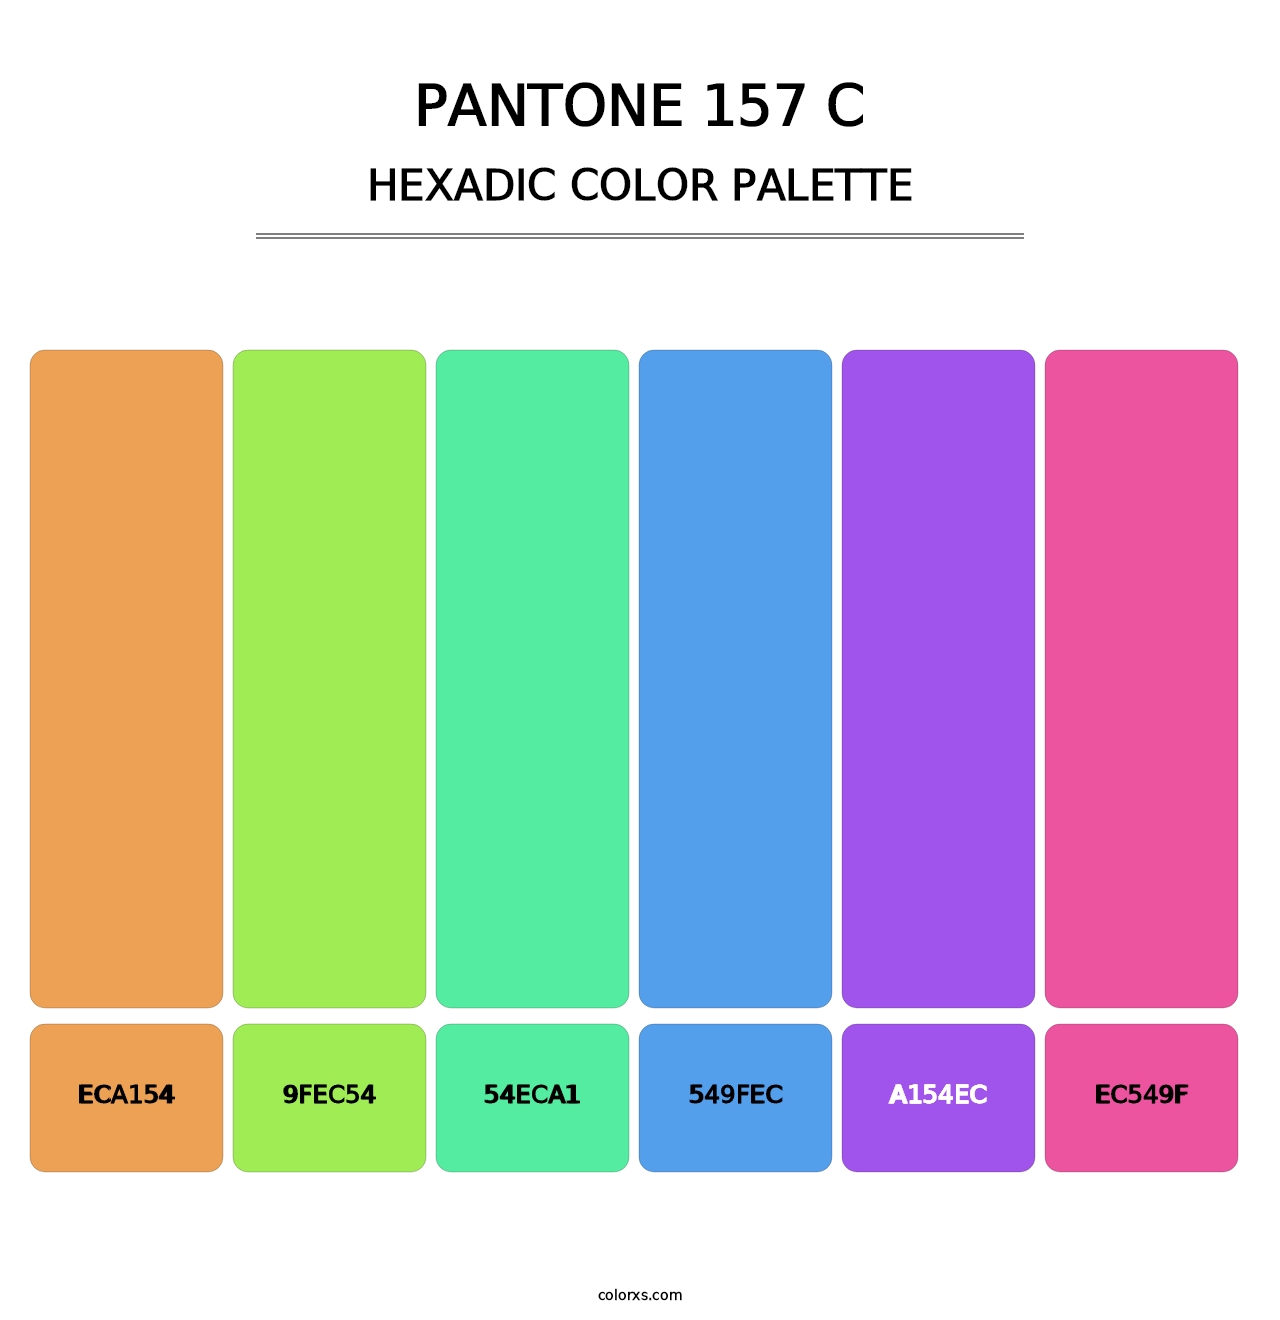 PANTONE 157 C - Hexadic Color Palette